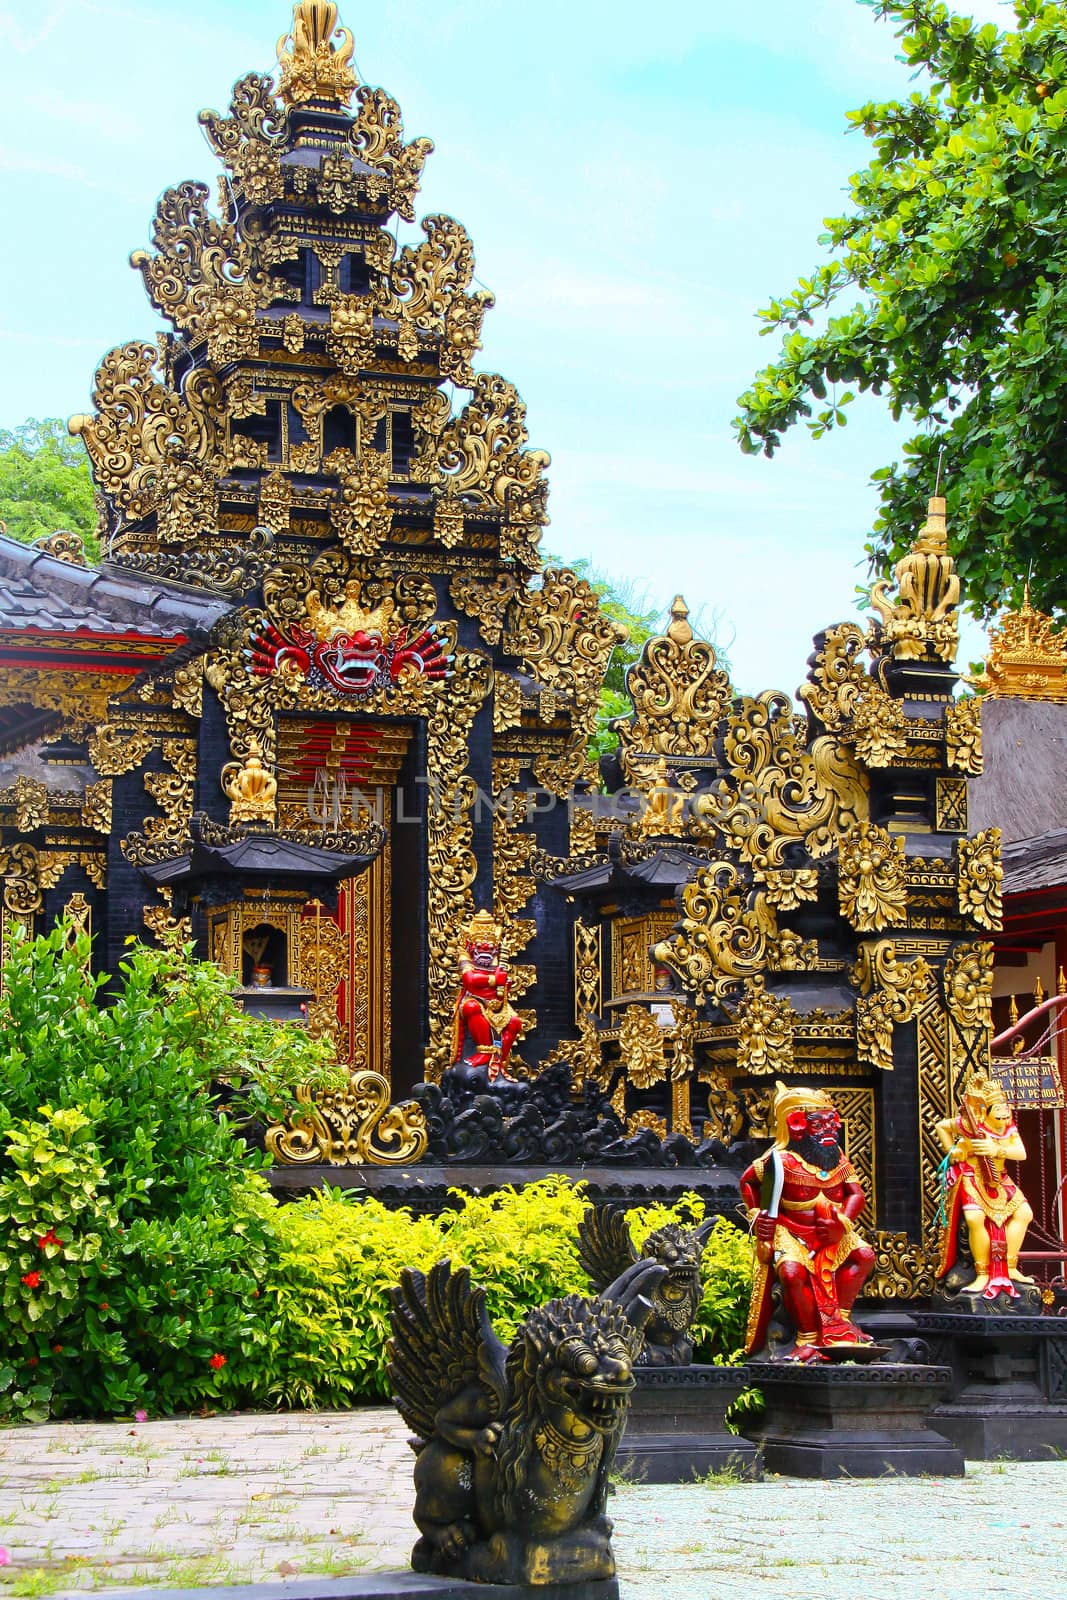 An ornate balinese style hindu temple in Nusa Dua, Bali, Indonesia